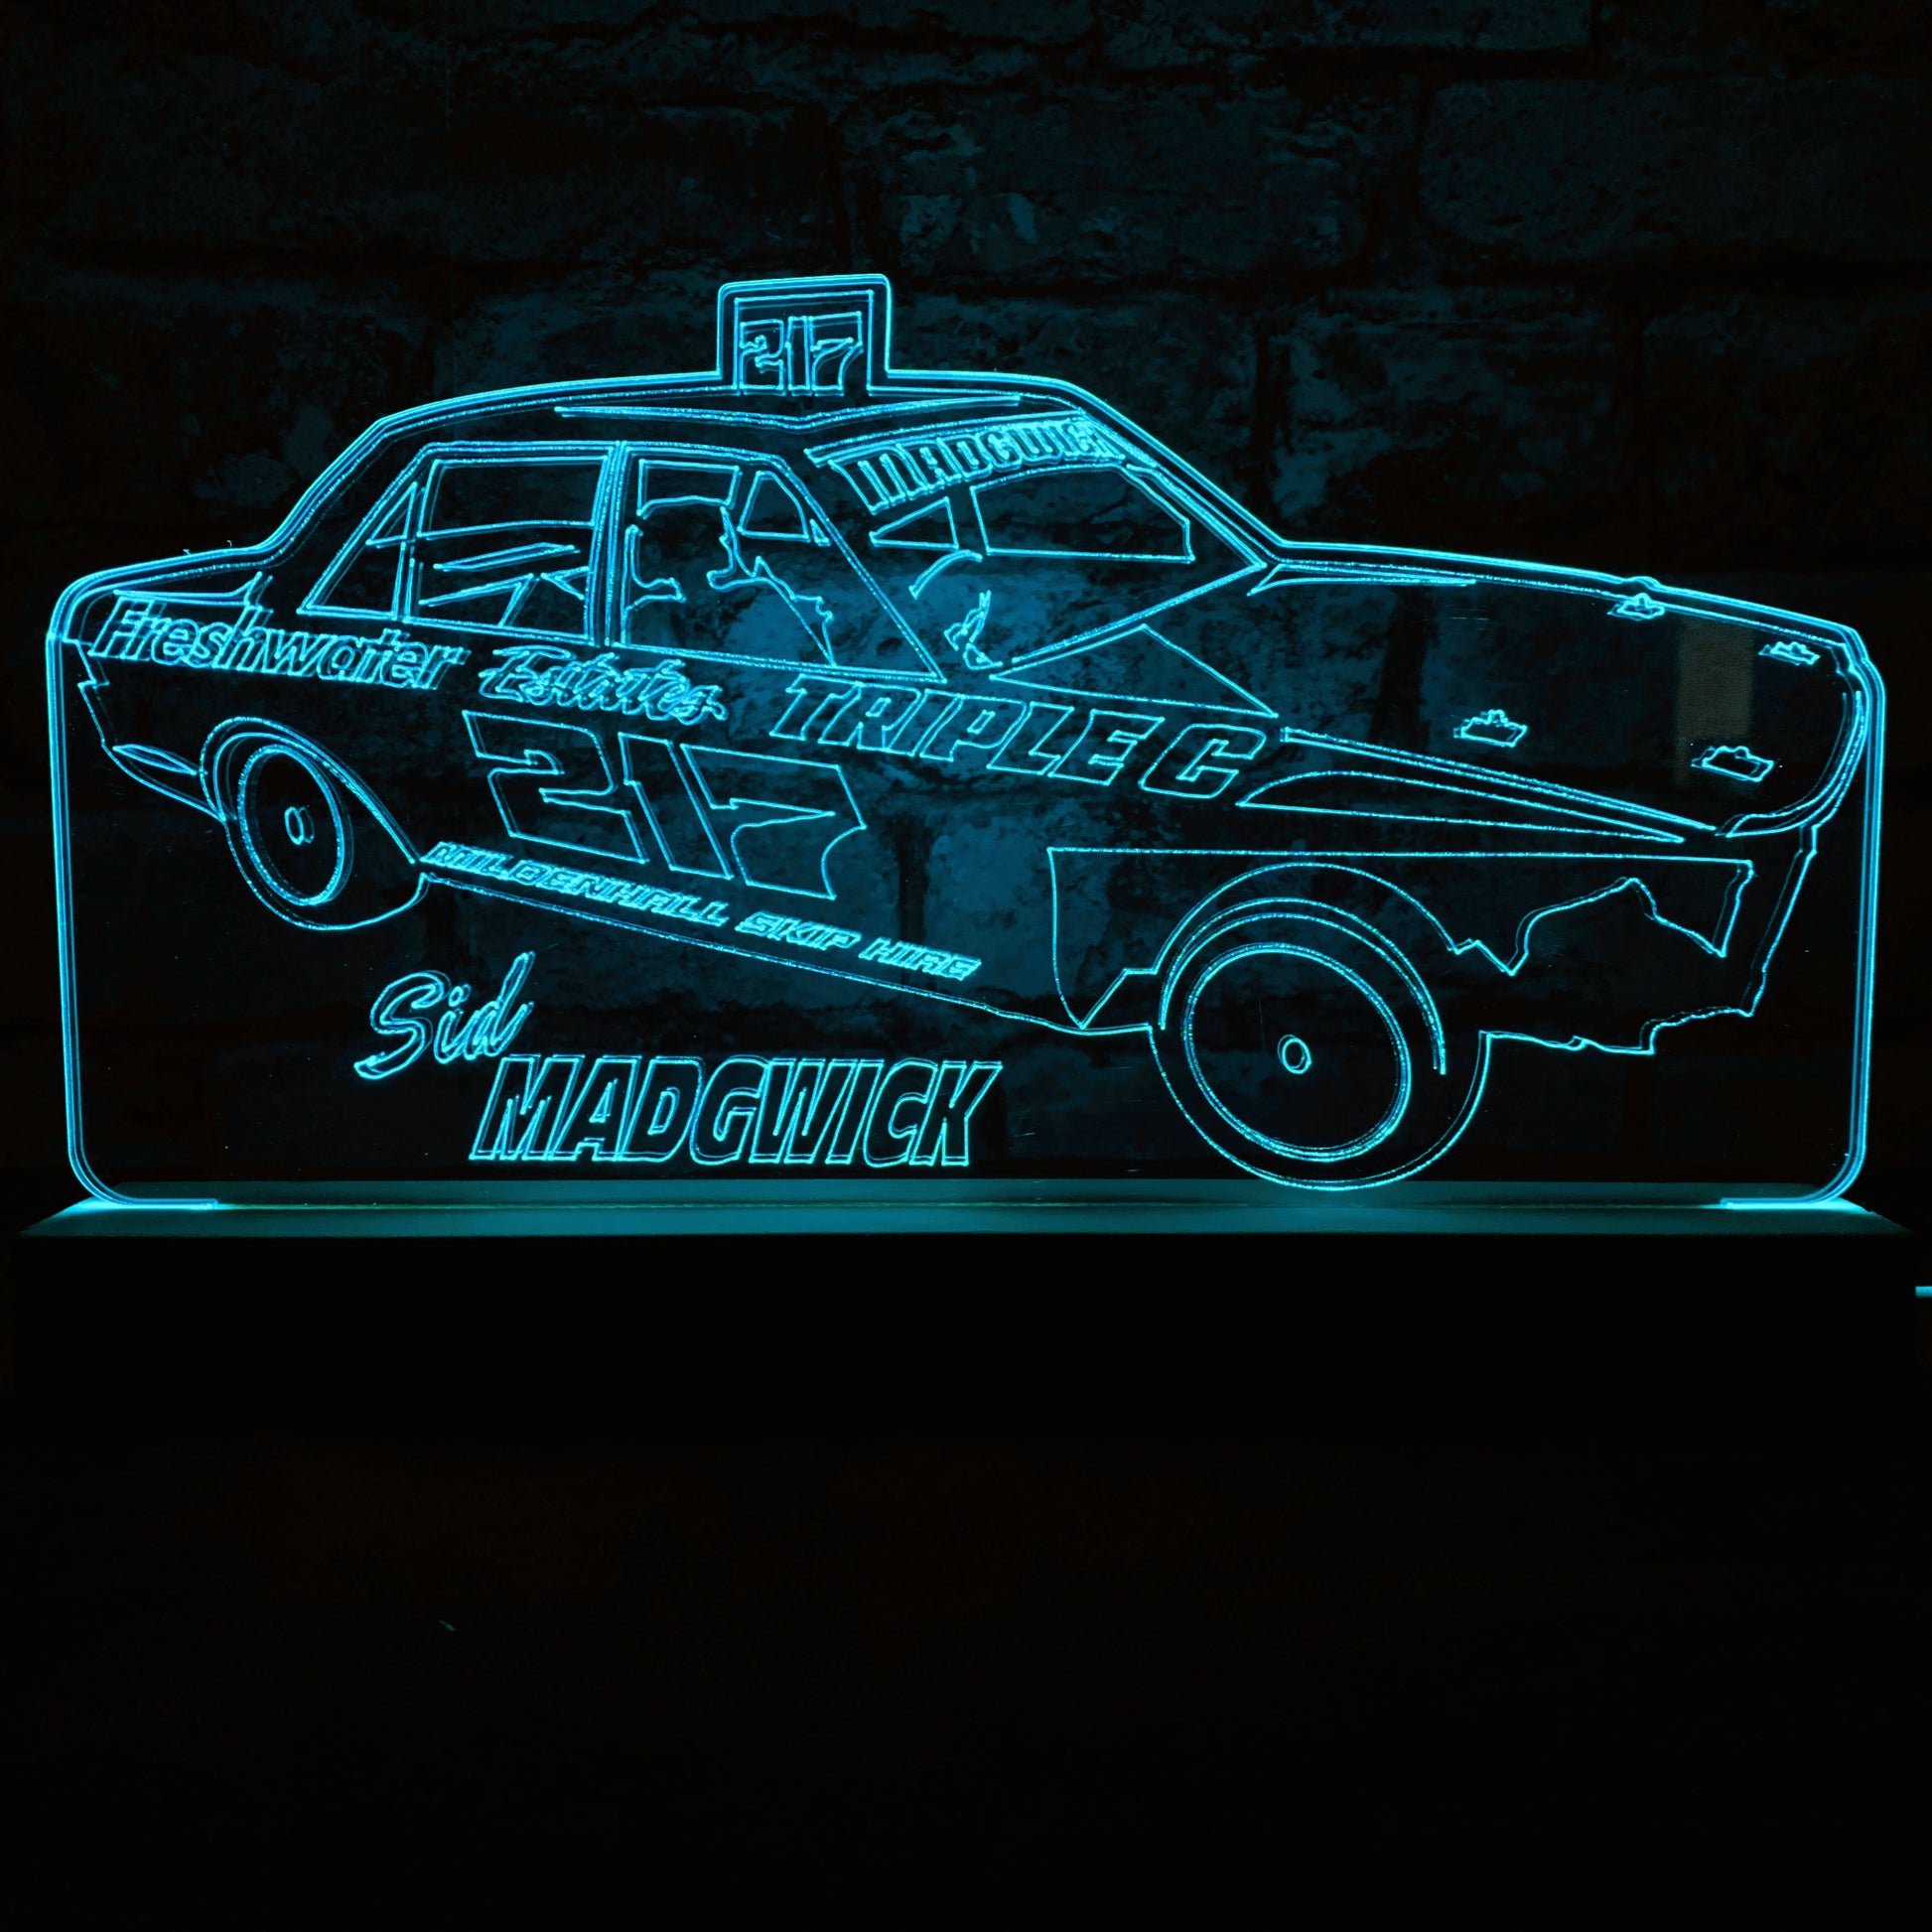 Sid Madgwick #217 - Banger Night Light - Large Wooden Base - Night Light - Stock Car & Banger Toy Tracks